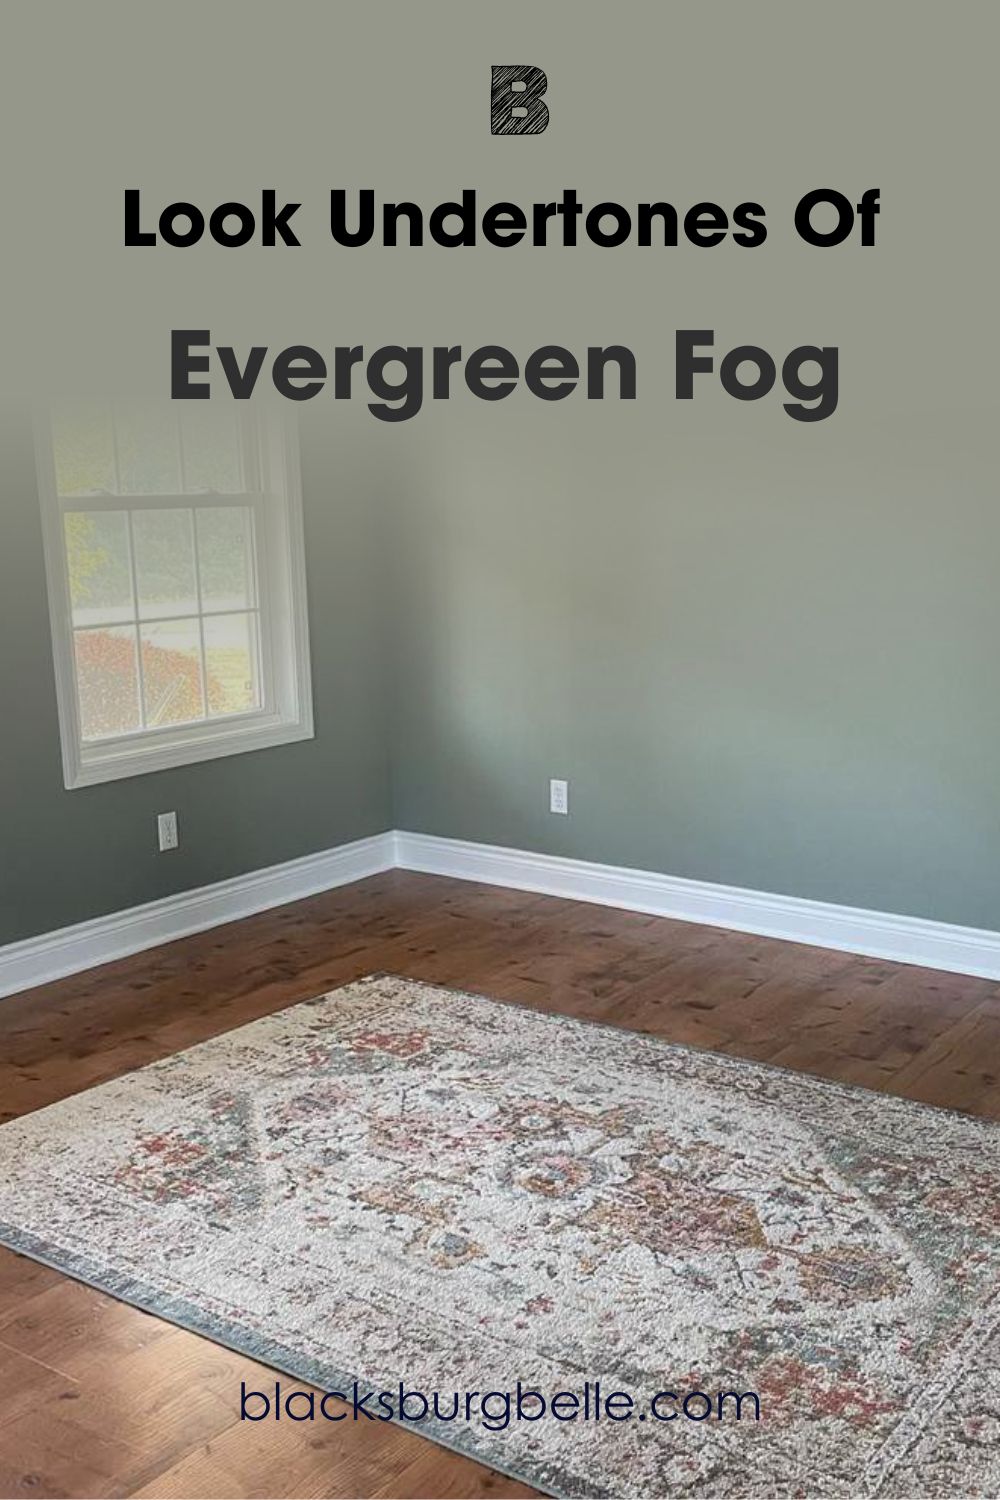 A Closer Look at the Undertones of Evergreen Fog